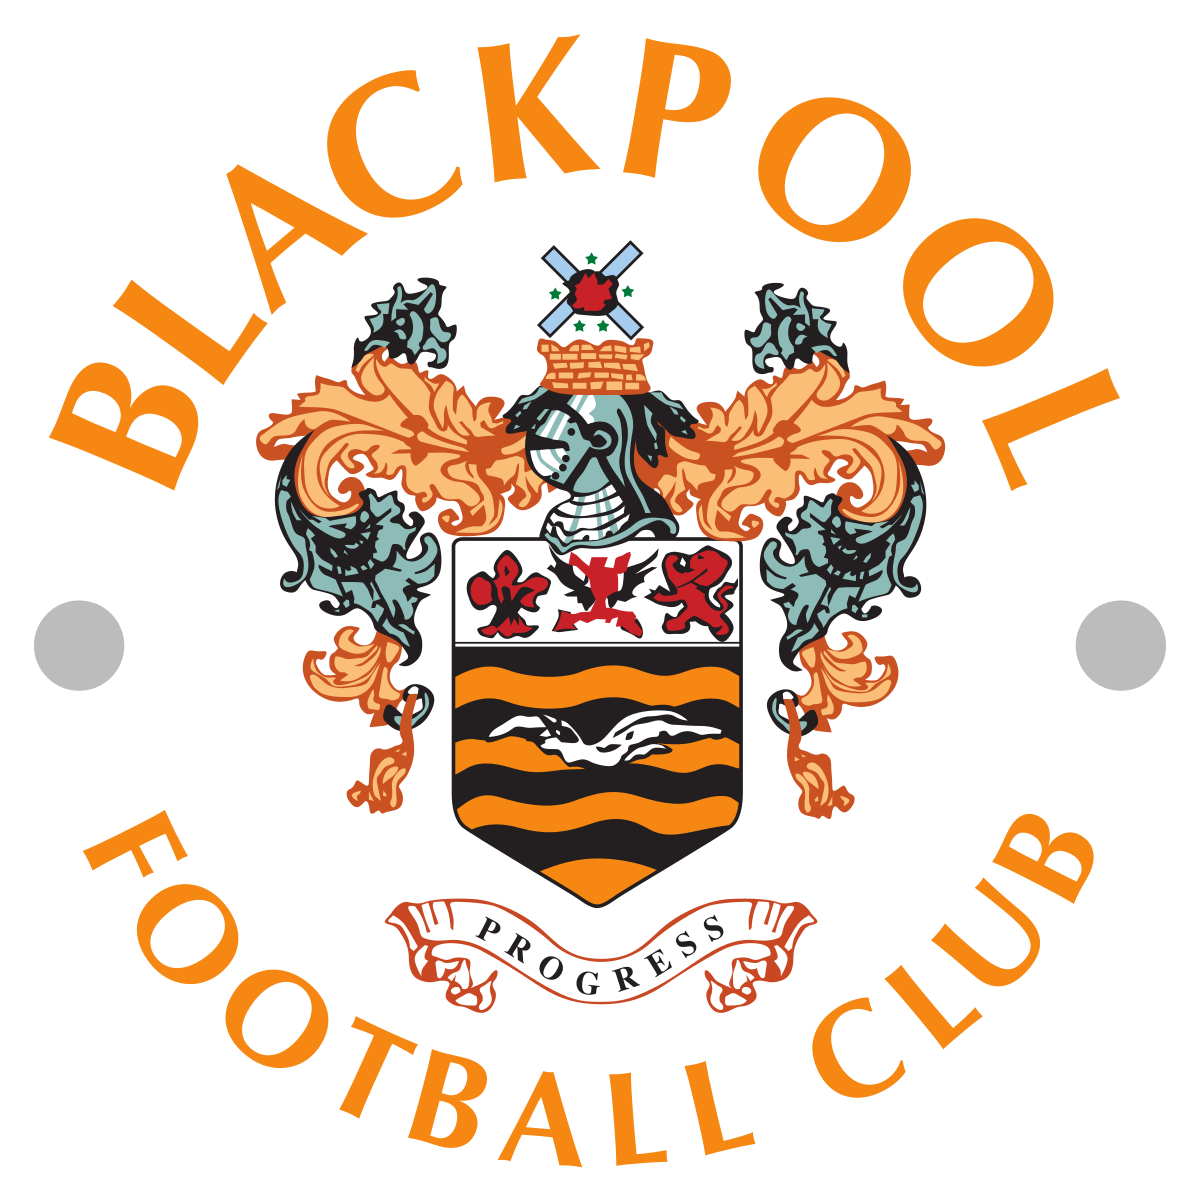 Blackpool Football Club - Wikipedia